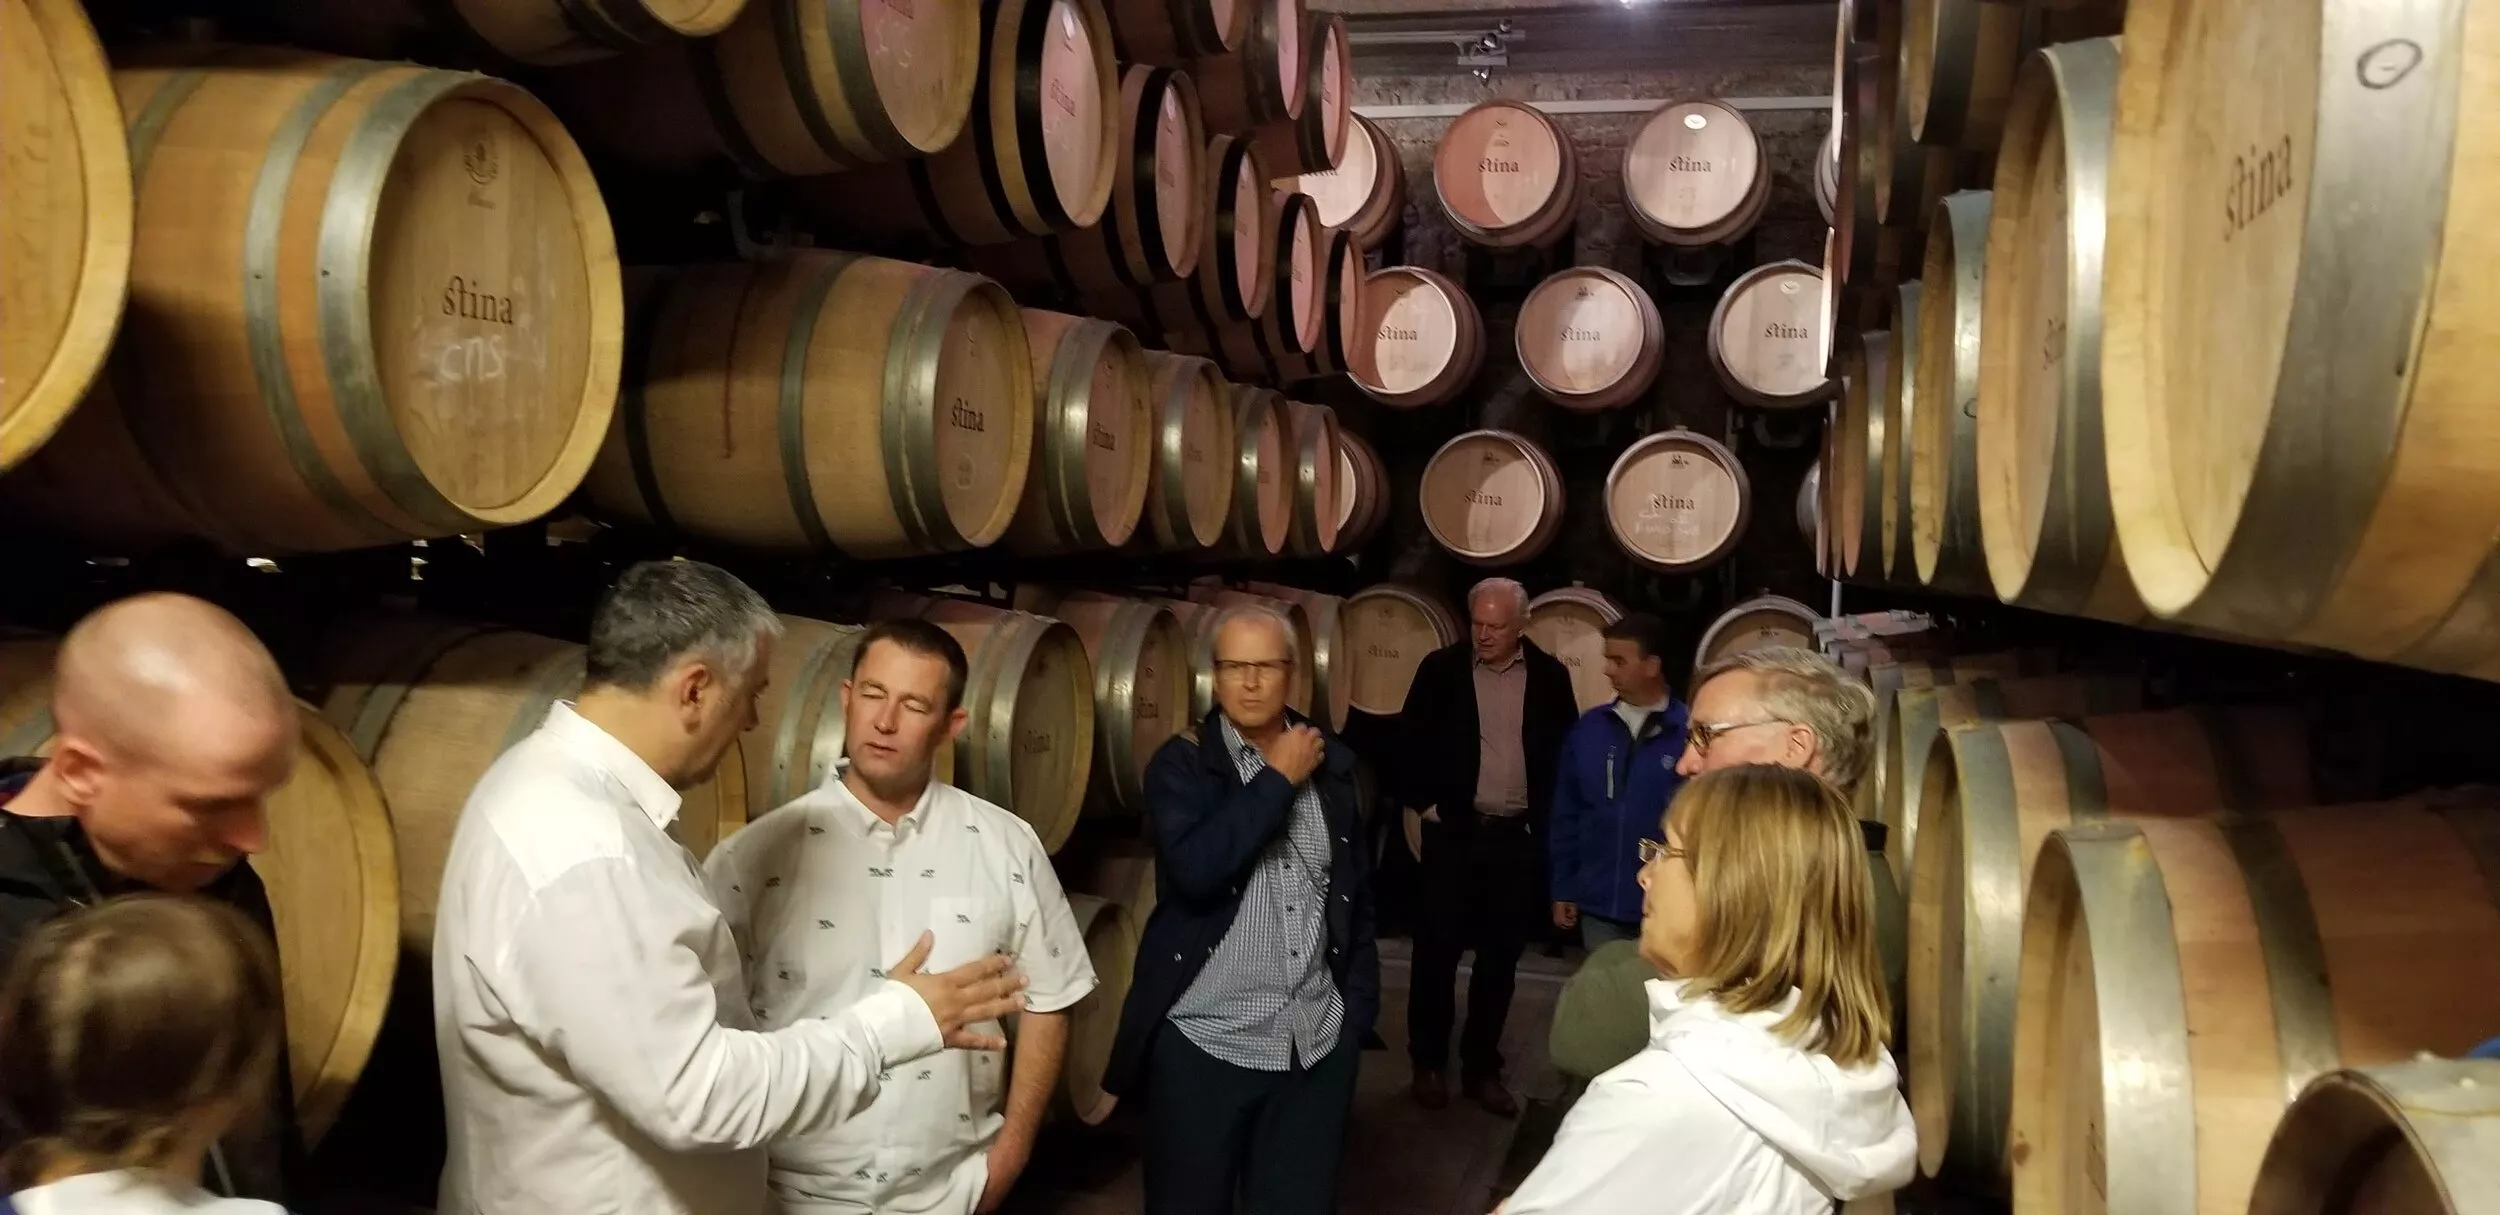 Stina Winery in Croatia, Europe | Wineries - Rated 0.9